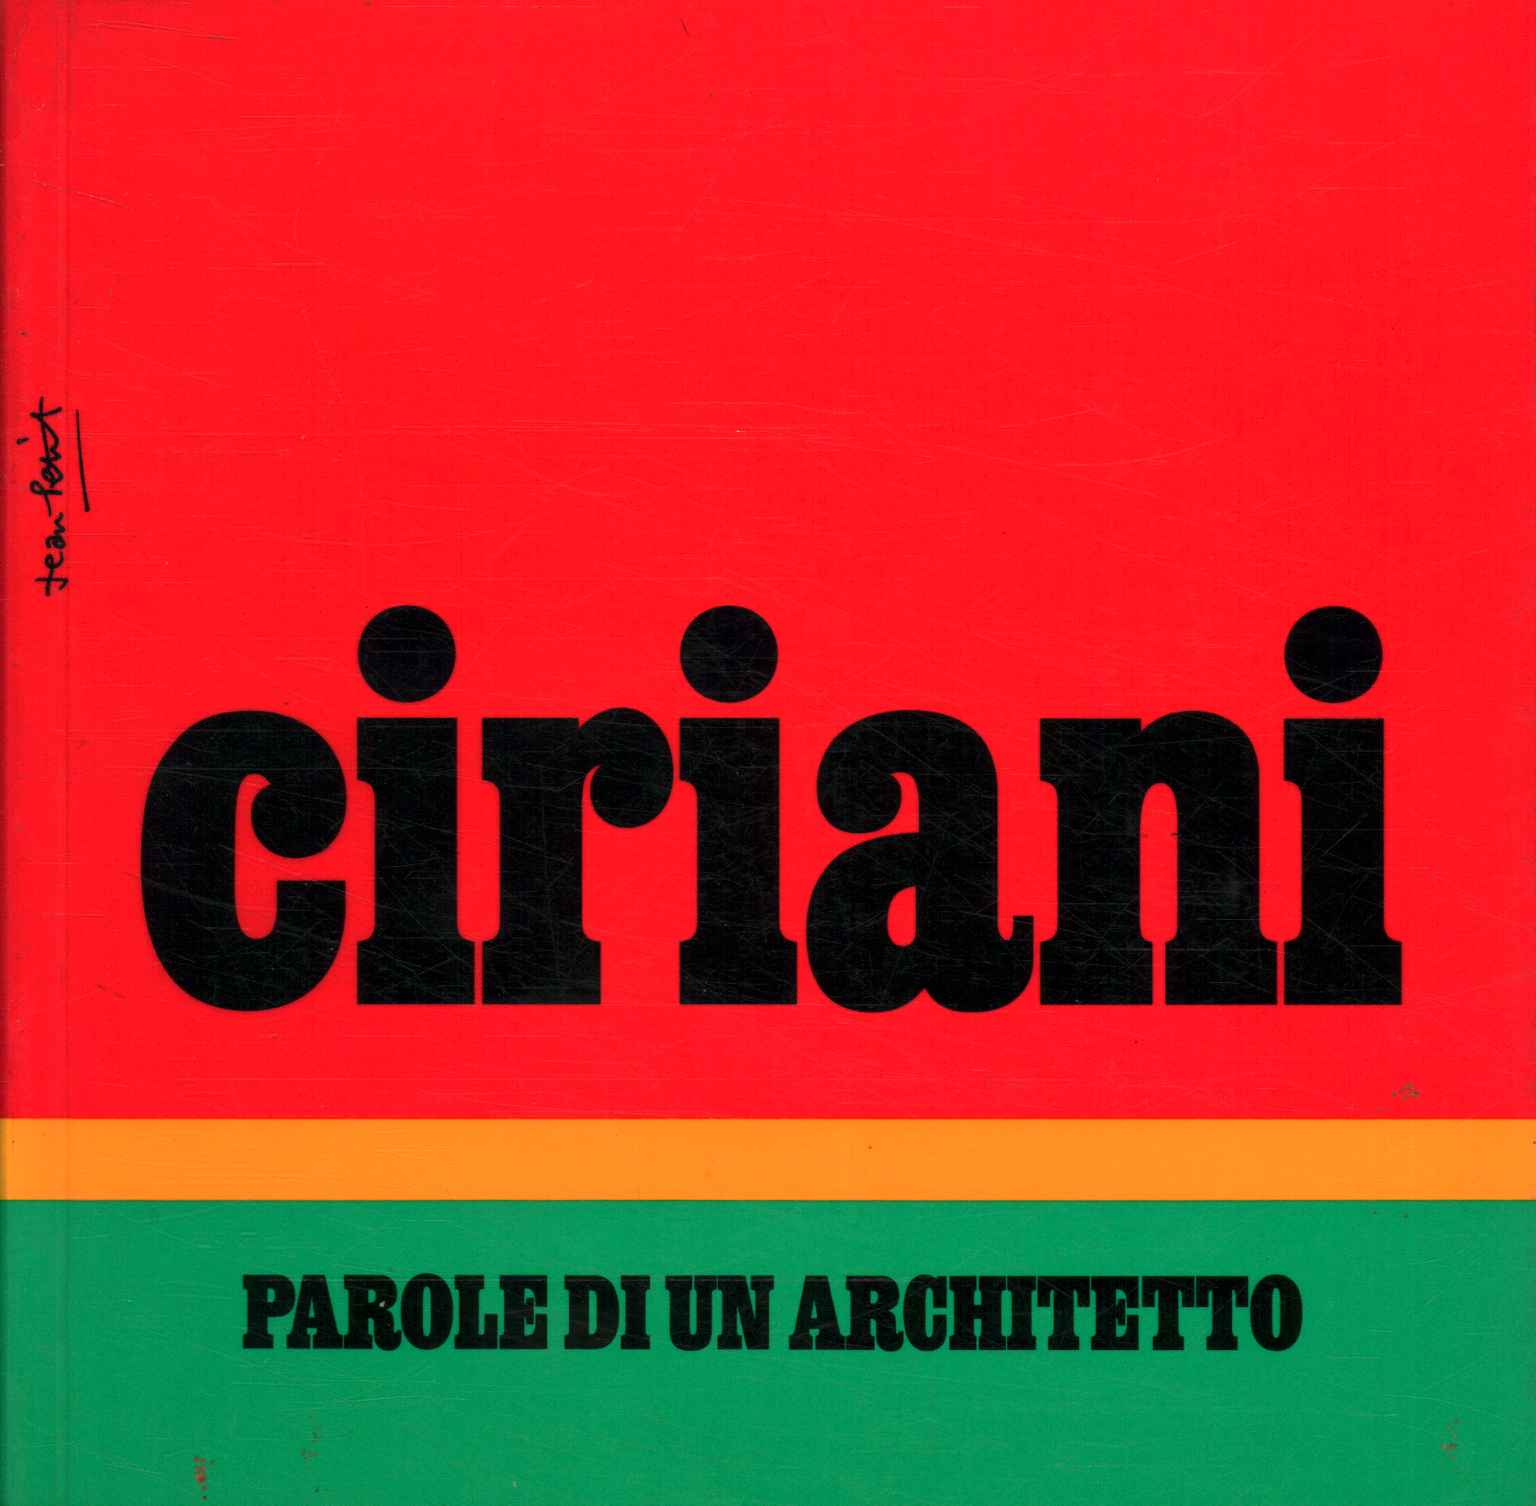 Ciriani. Words of an architect